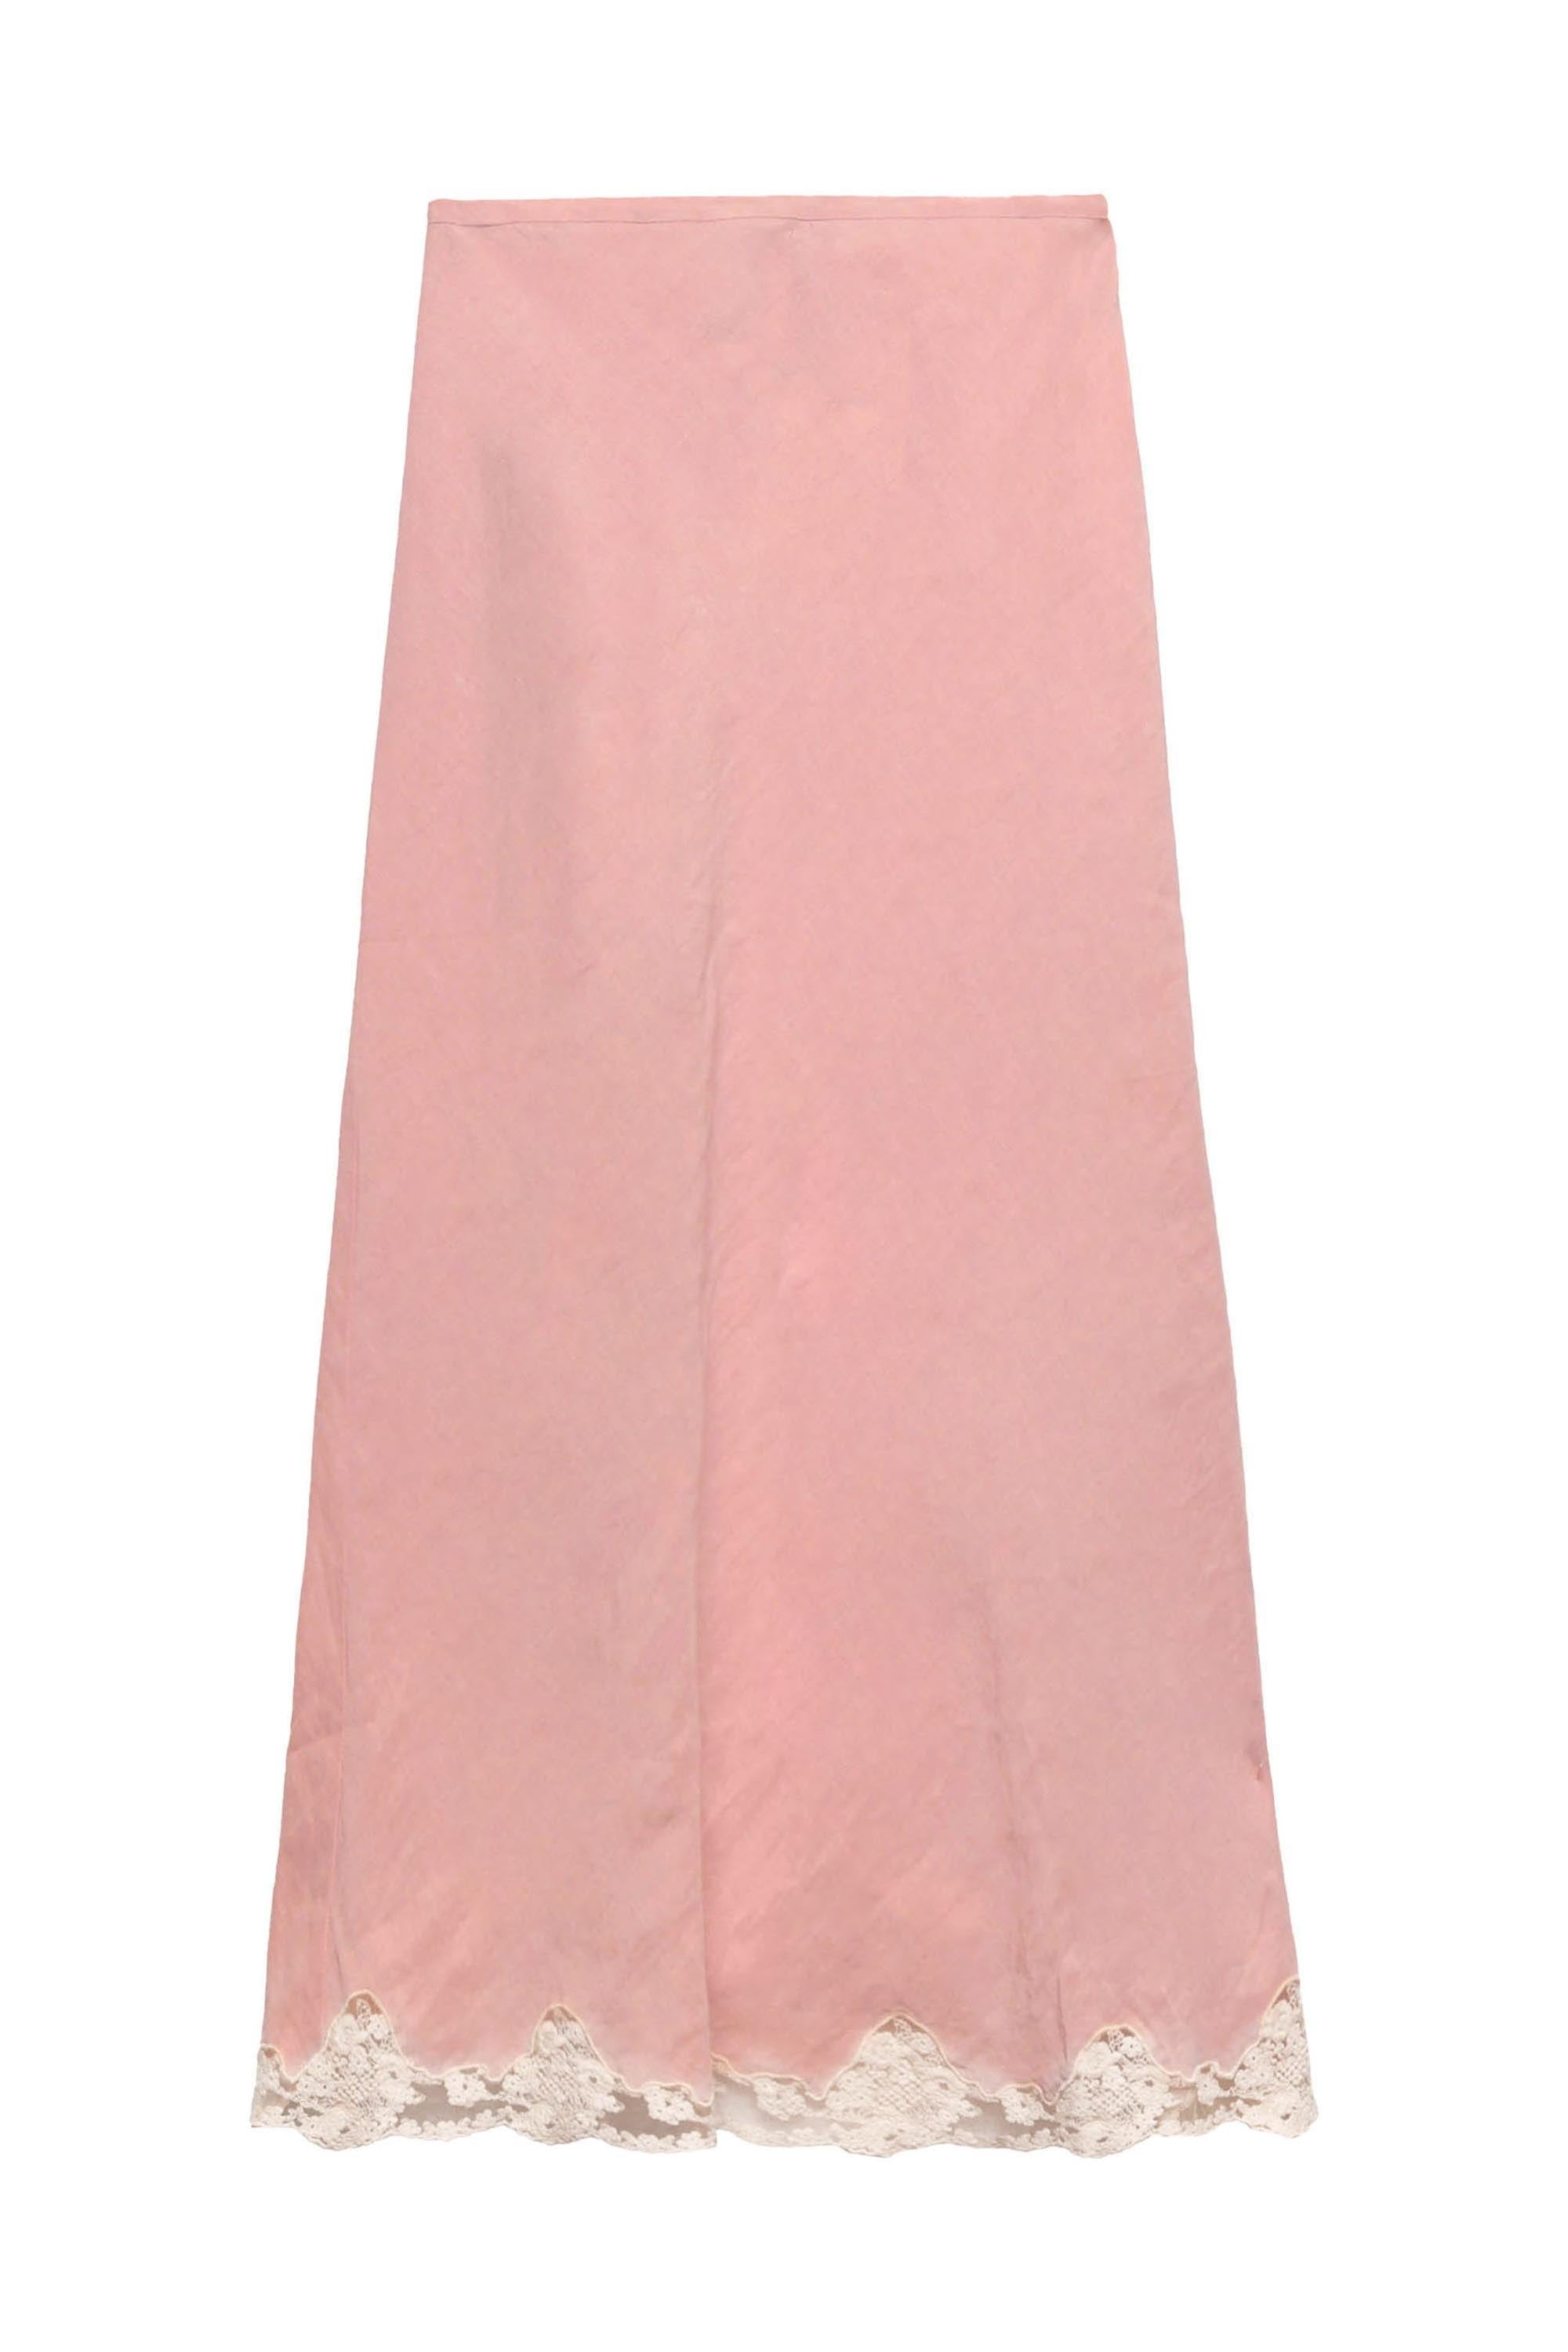 Crystal Skirt - Powder Pink